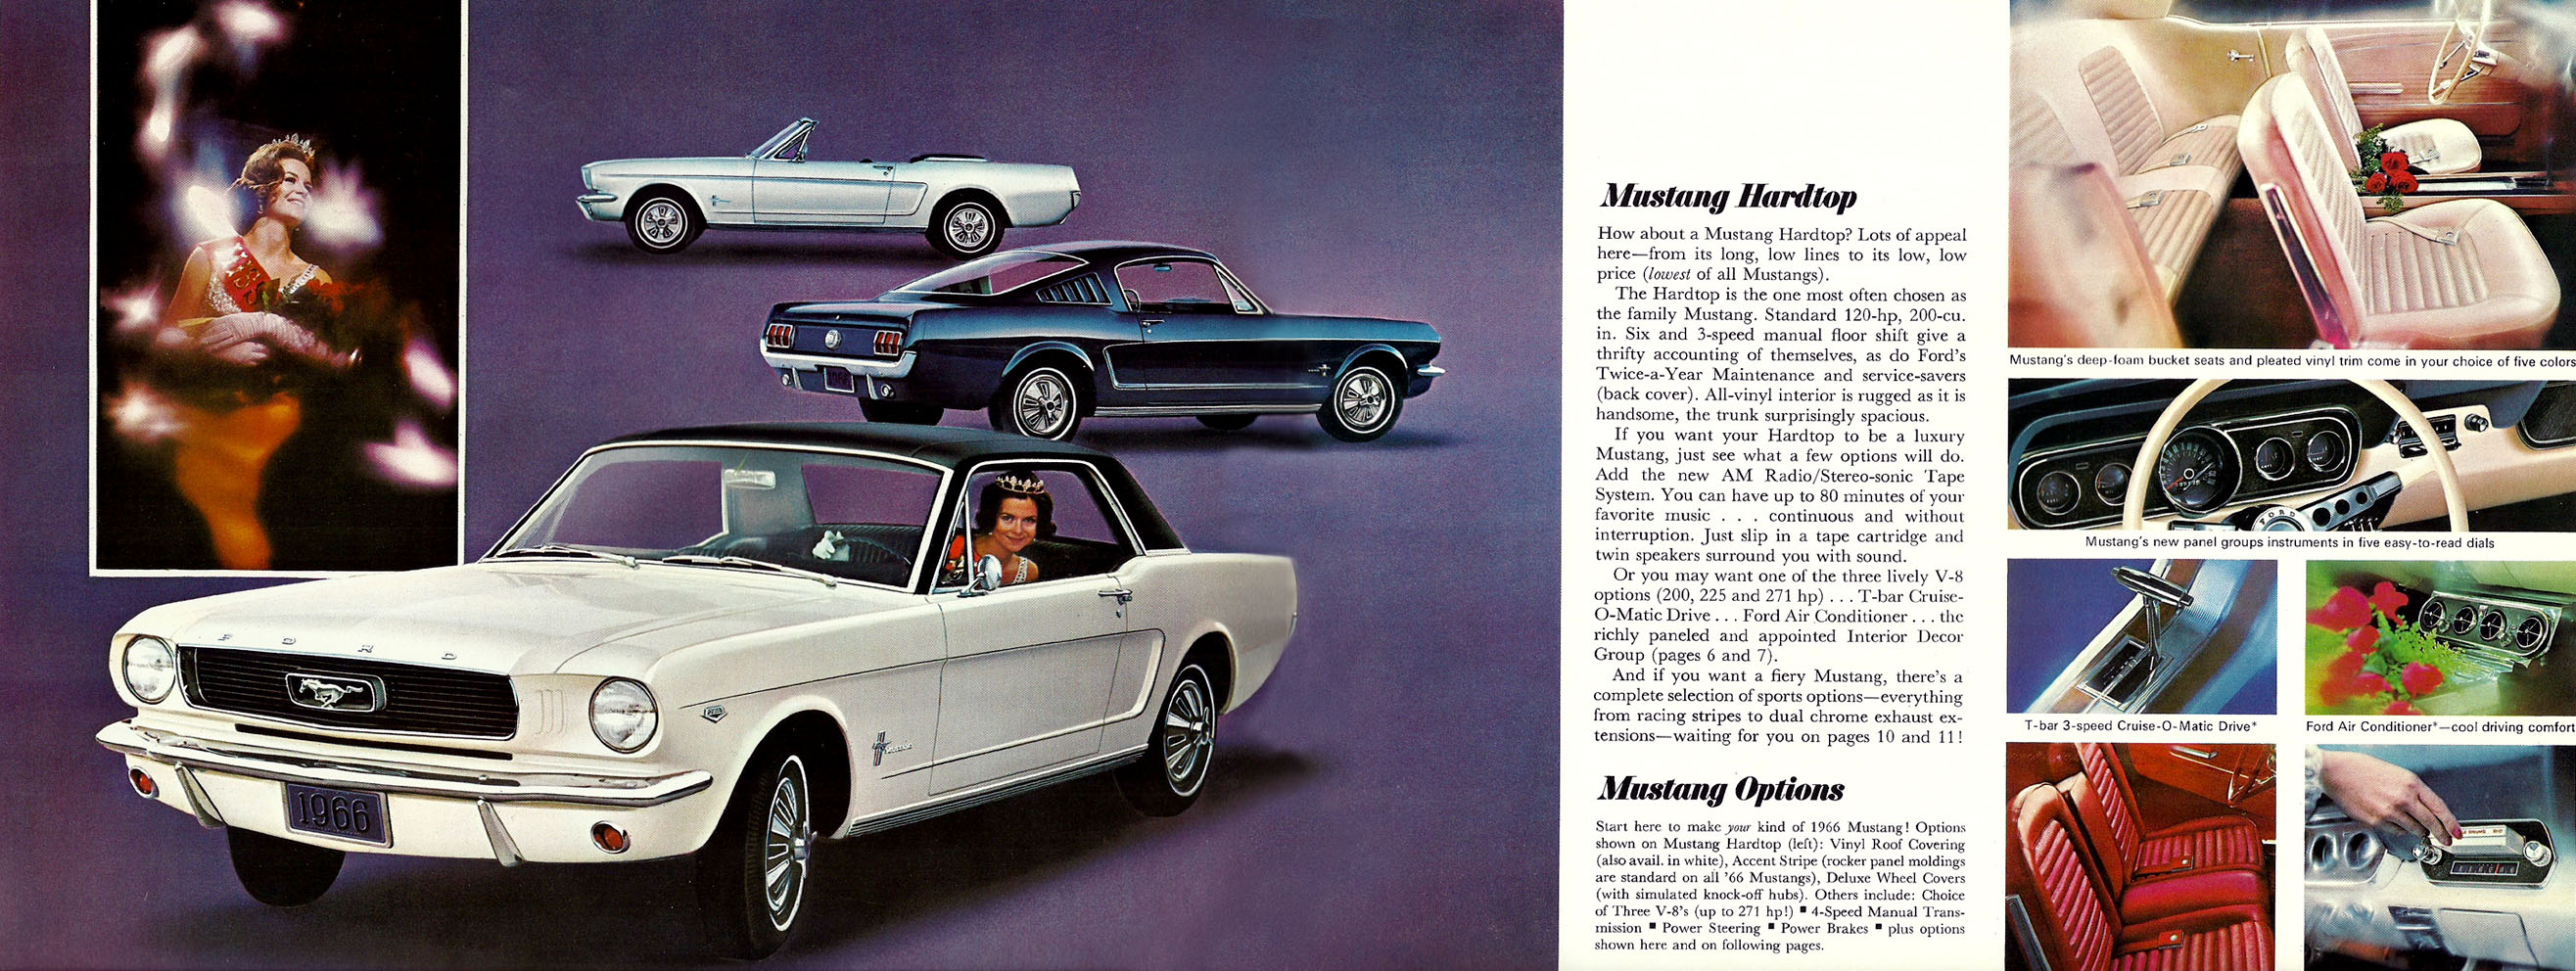 1966 Mustang Prospekt Page 4-5